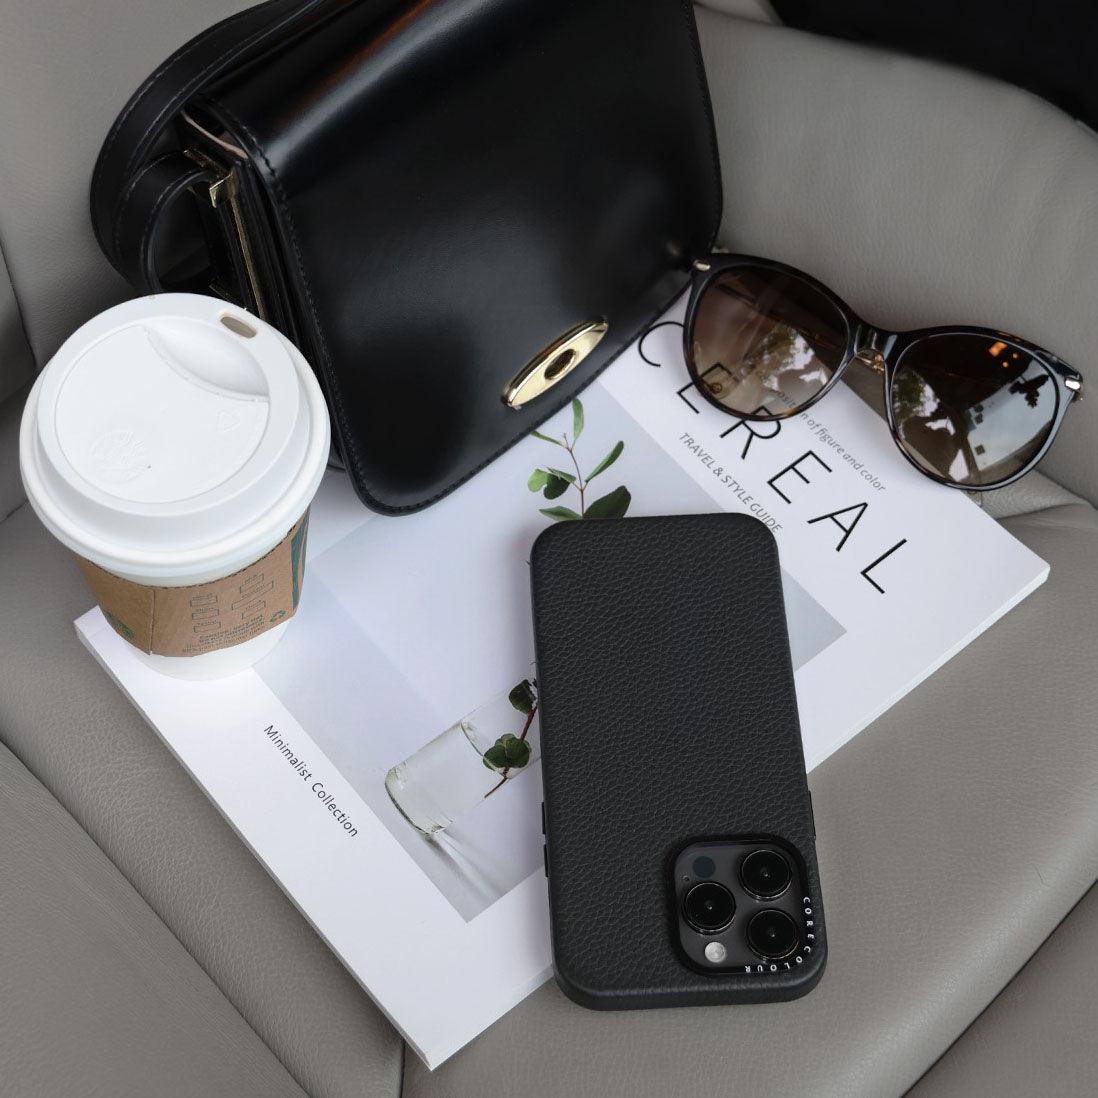 iPhone 12 Pro Black Genuine Leather Phone Case - CORECOLOUR AU